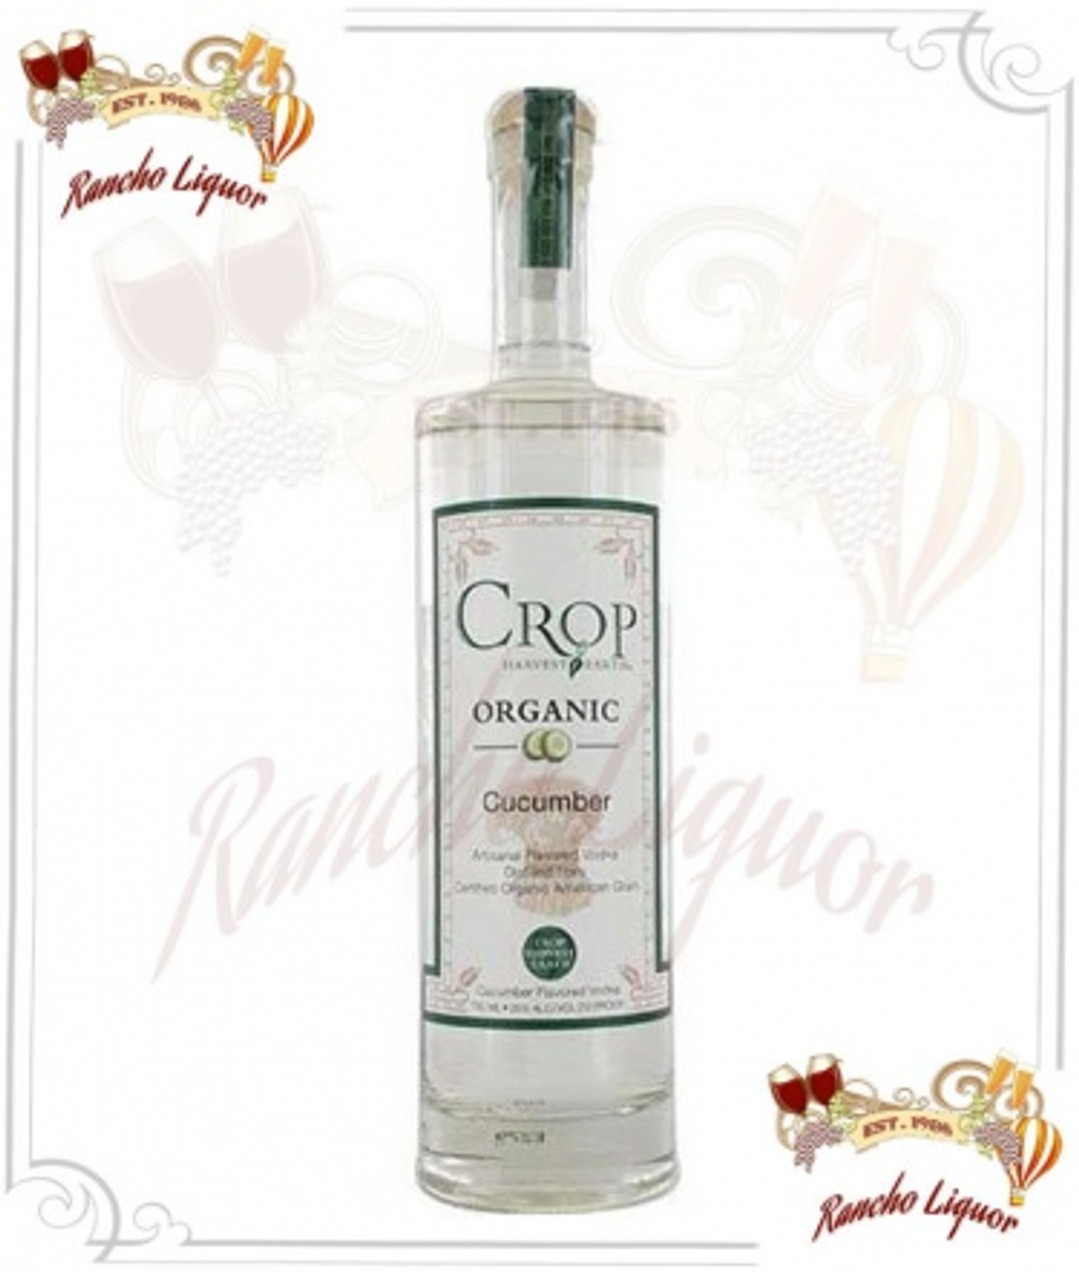 crop-harvest-earth-cucumber-flavored-organic-vodka-rancho-liquor